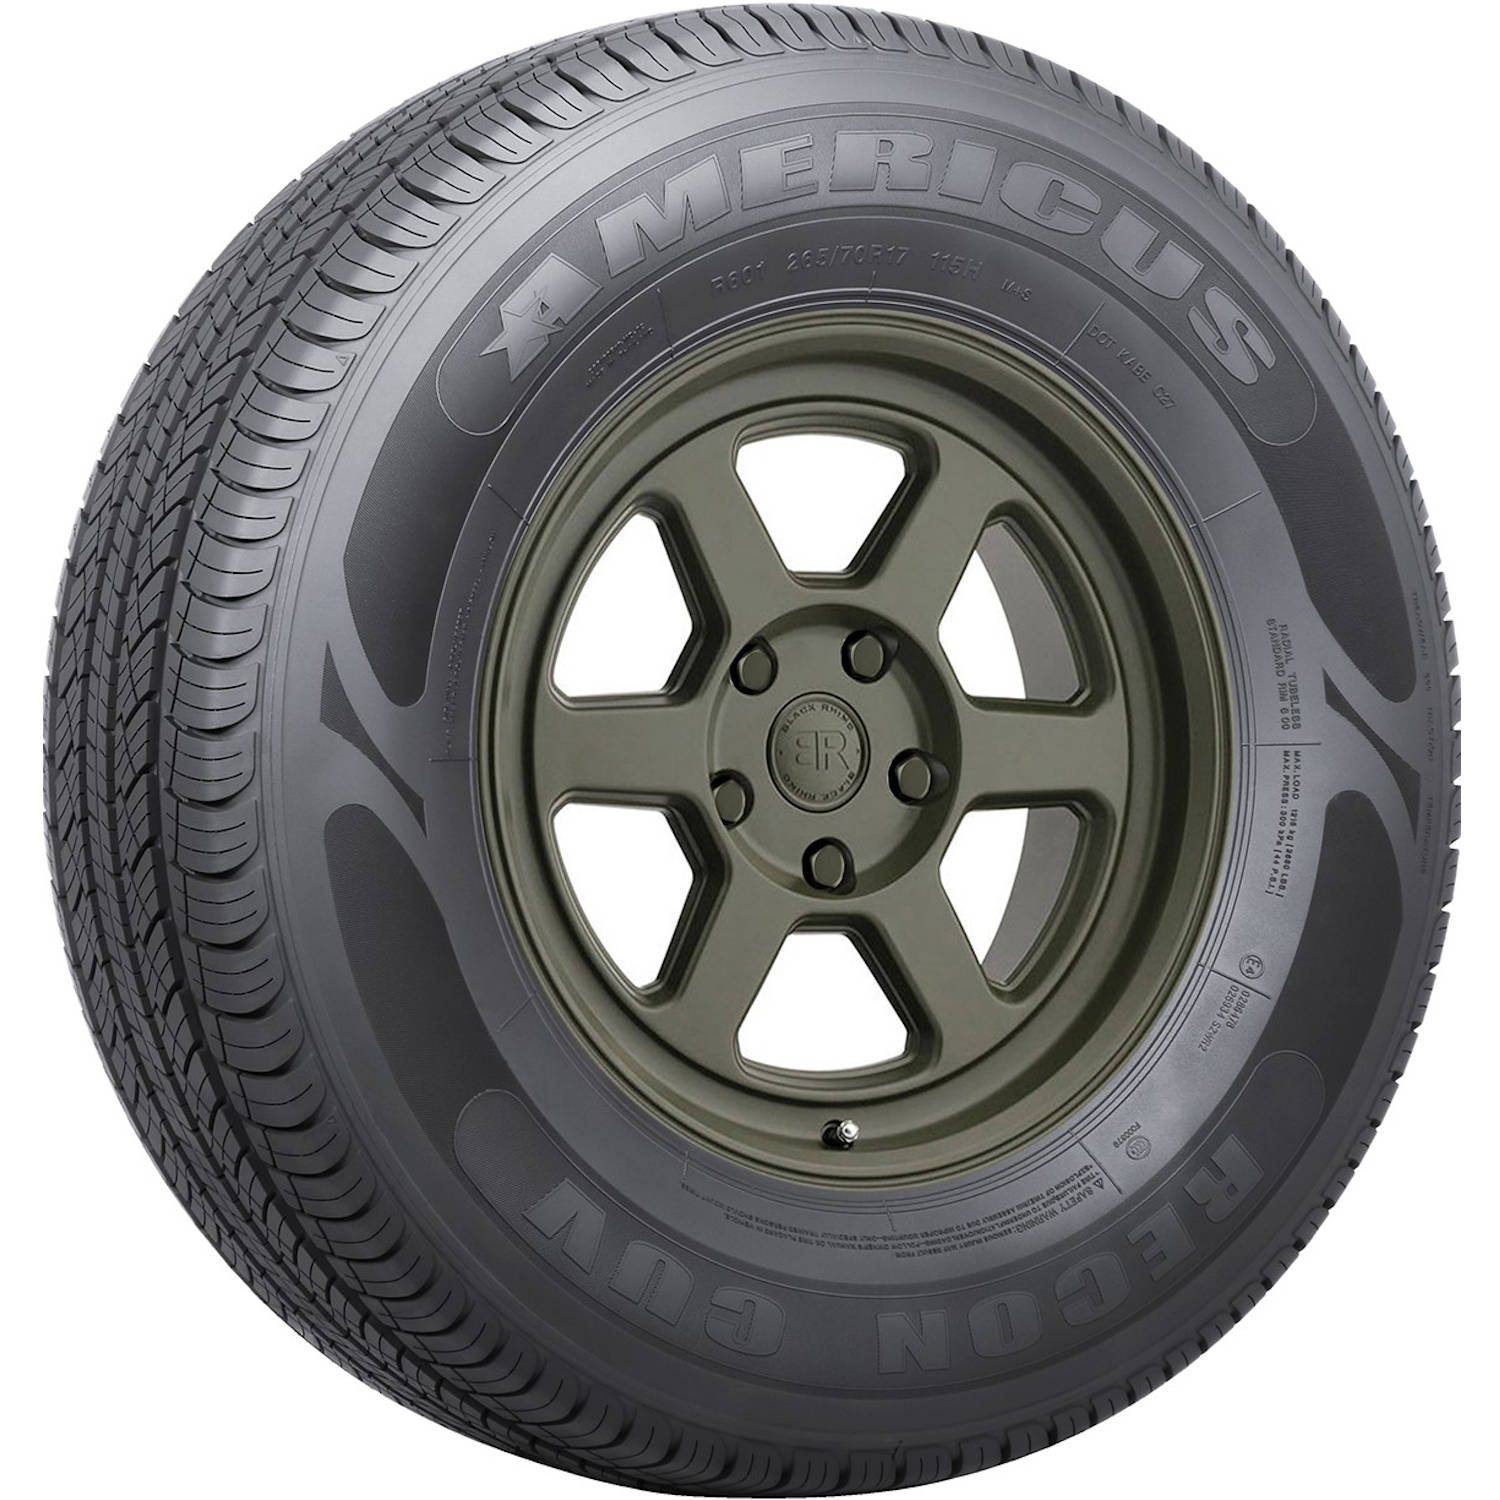 AMERICUS RECON CUV 215/70R16 (27.9X8.5R 16) Tires